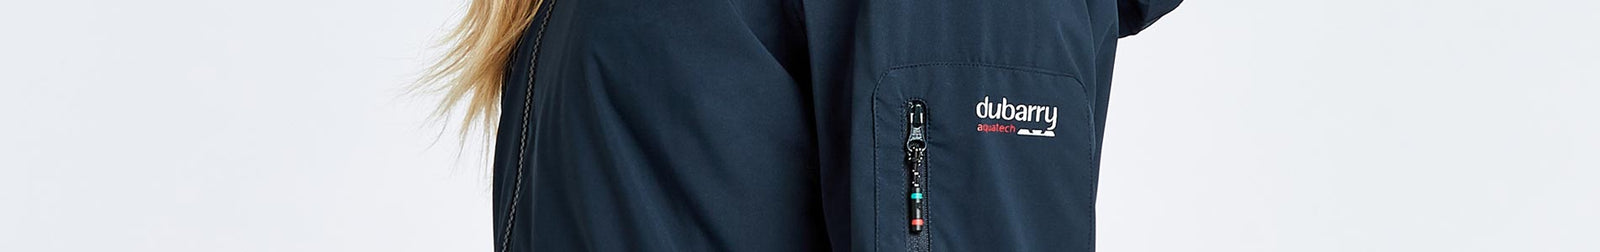 Dubarry Aquatech Clothing | Embroiderable Team Uniform | ArdMoor